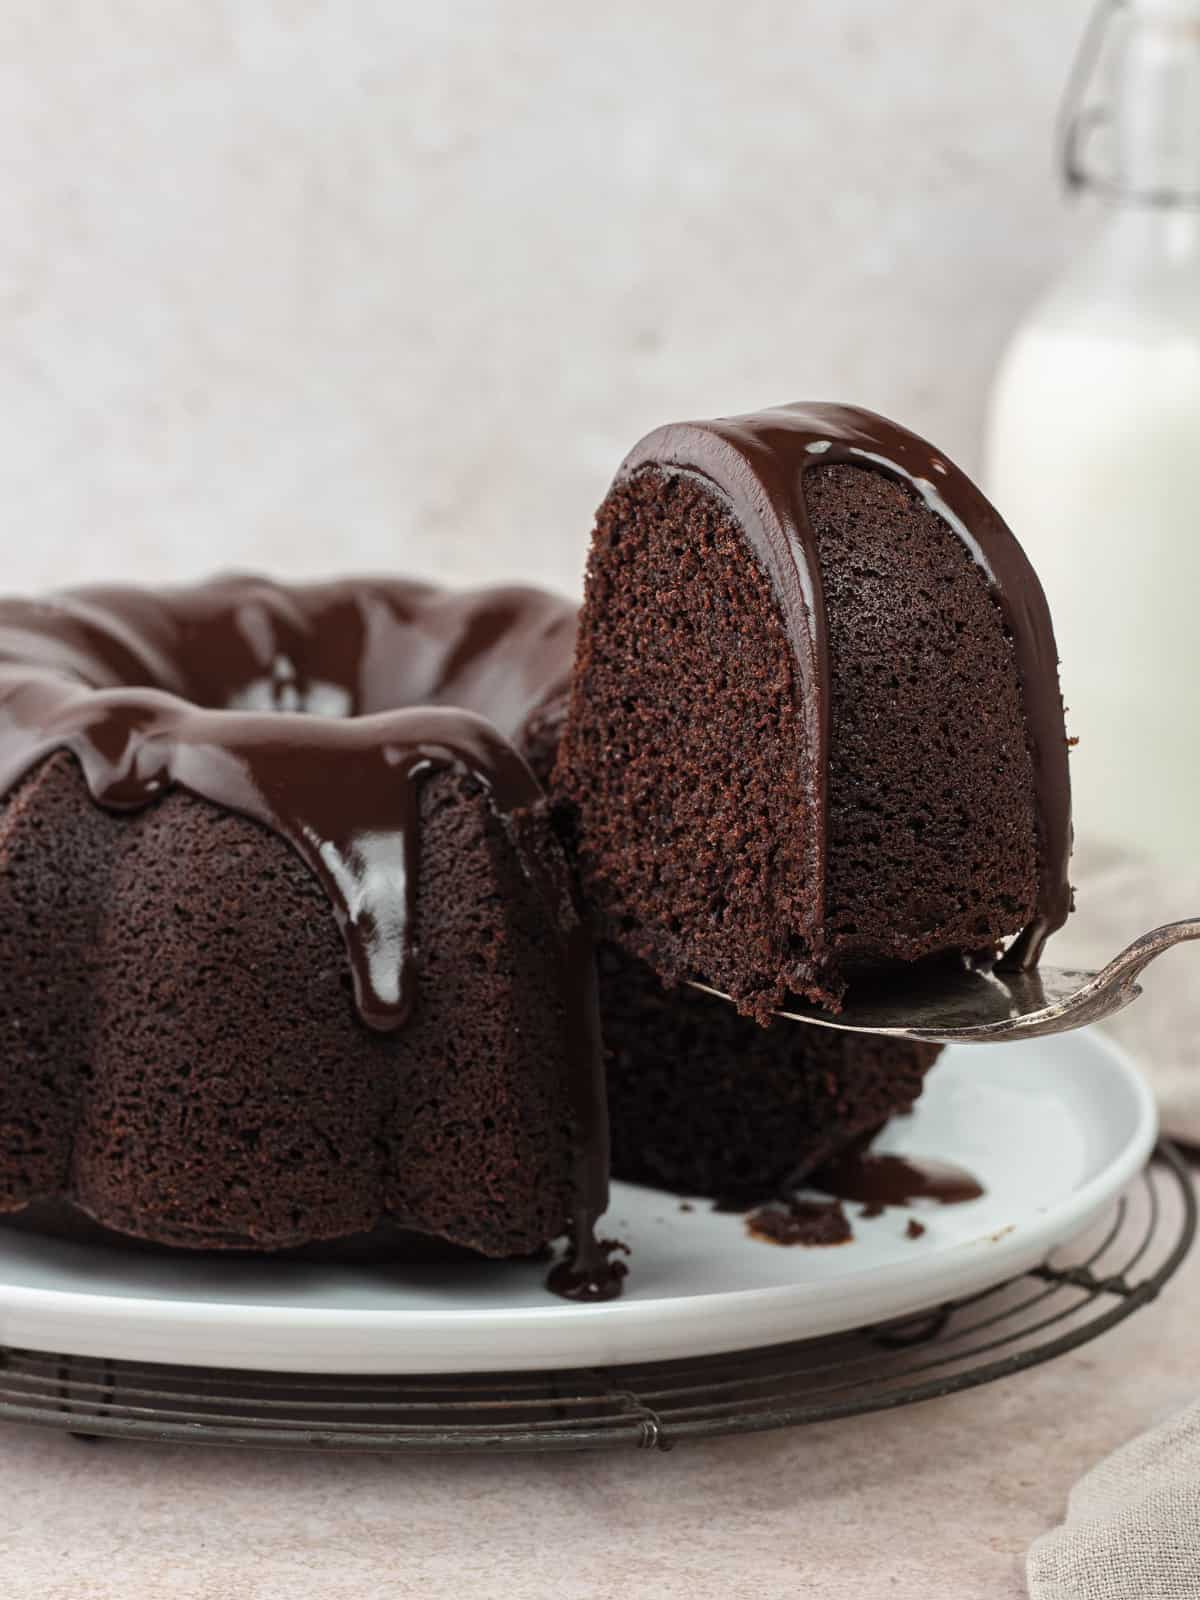 Chocolate olive oil bundt cake